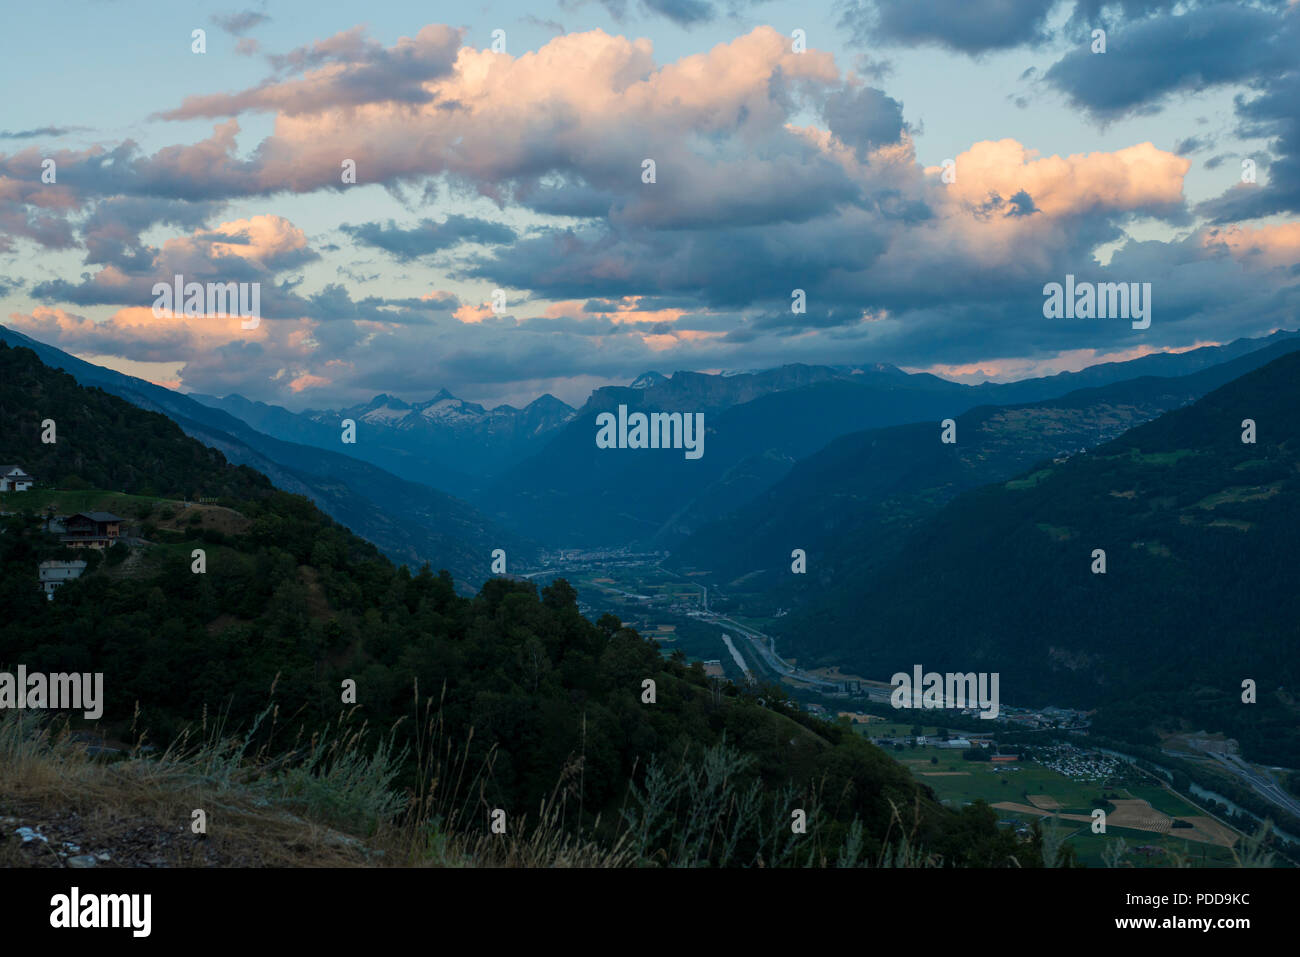 Swiss Alps surrounding a Switzerland town Stock Photo